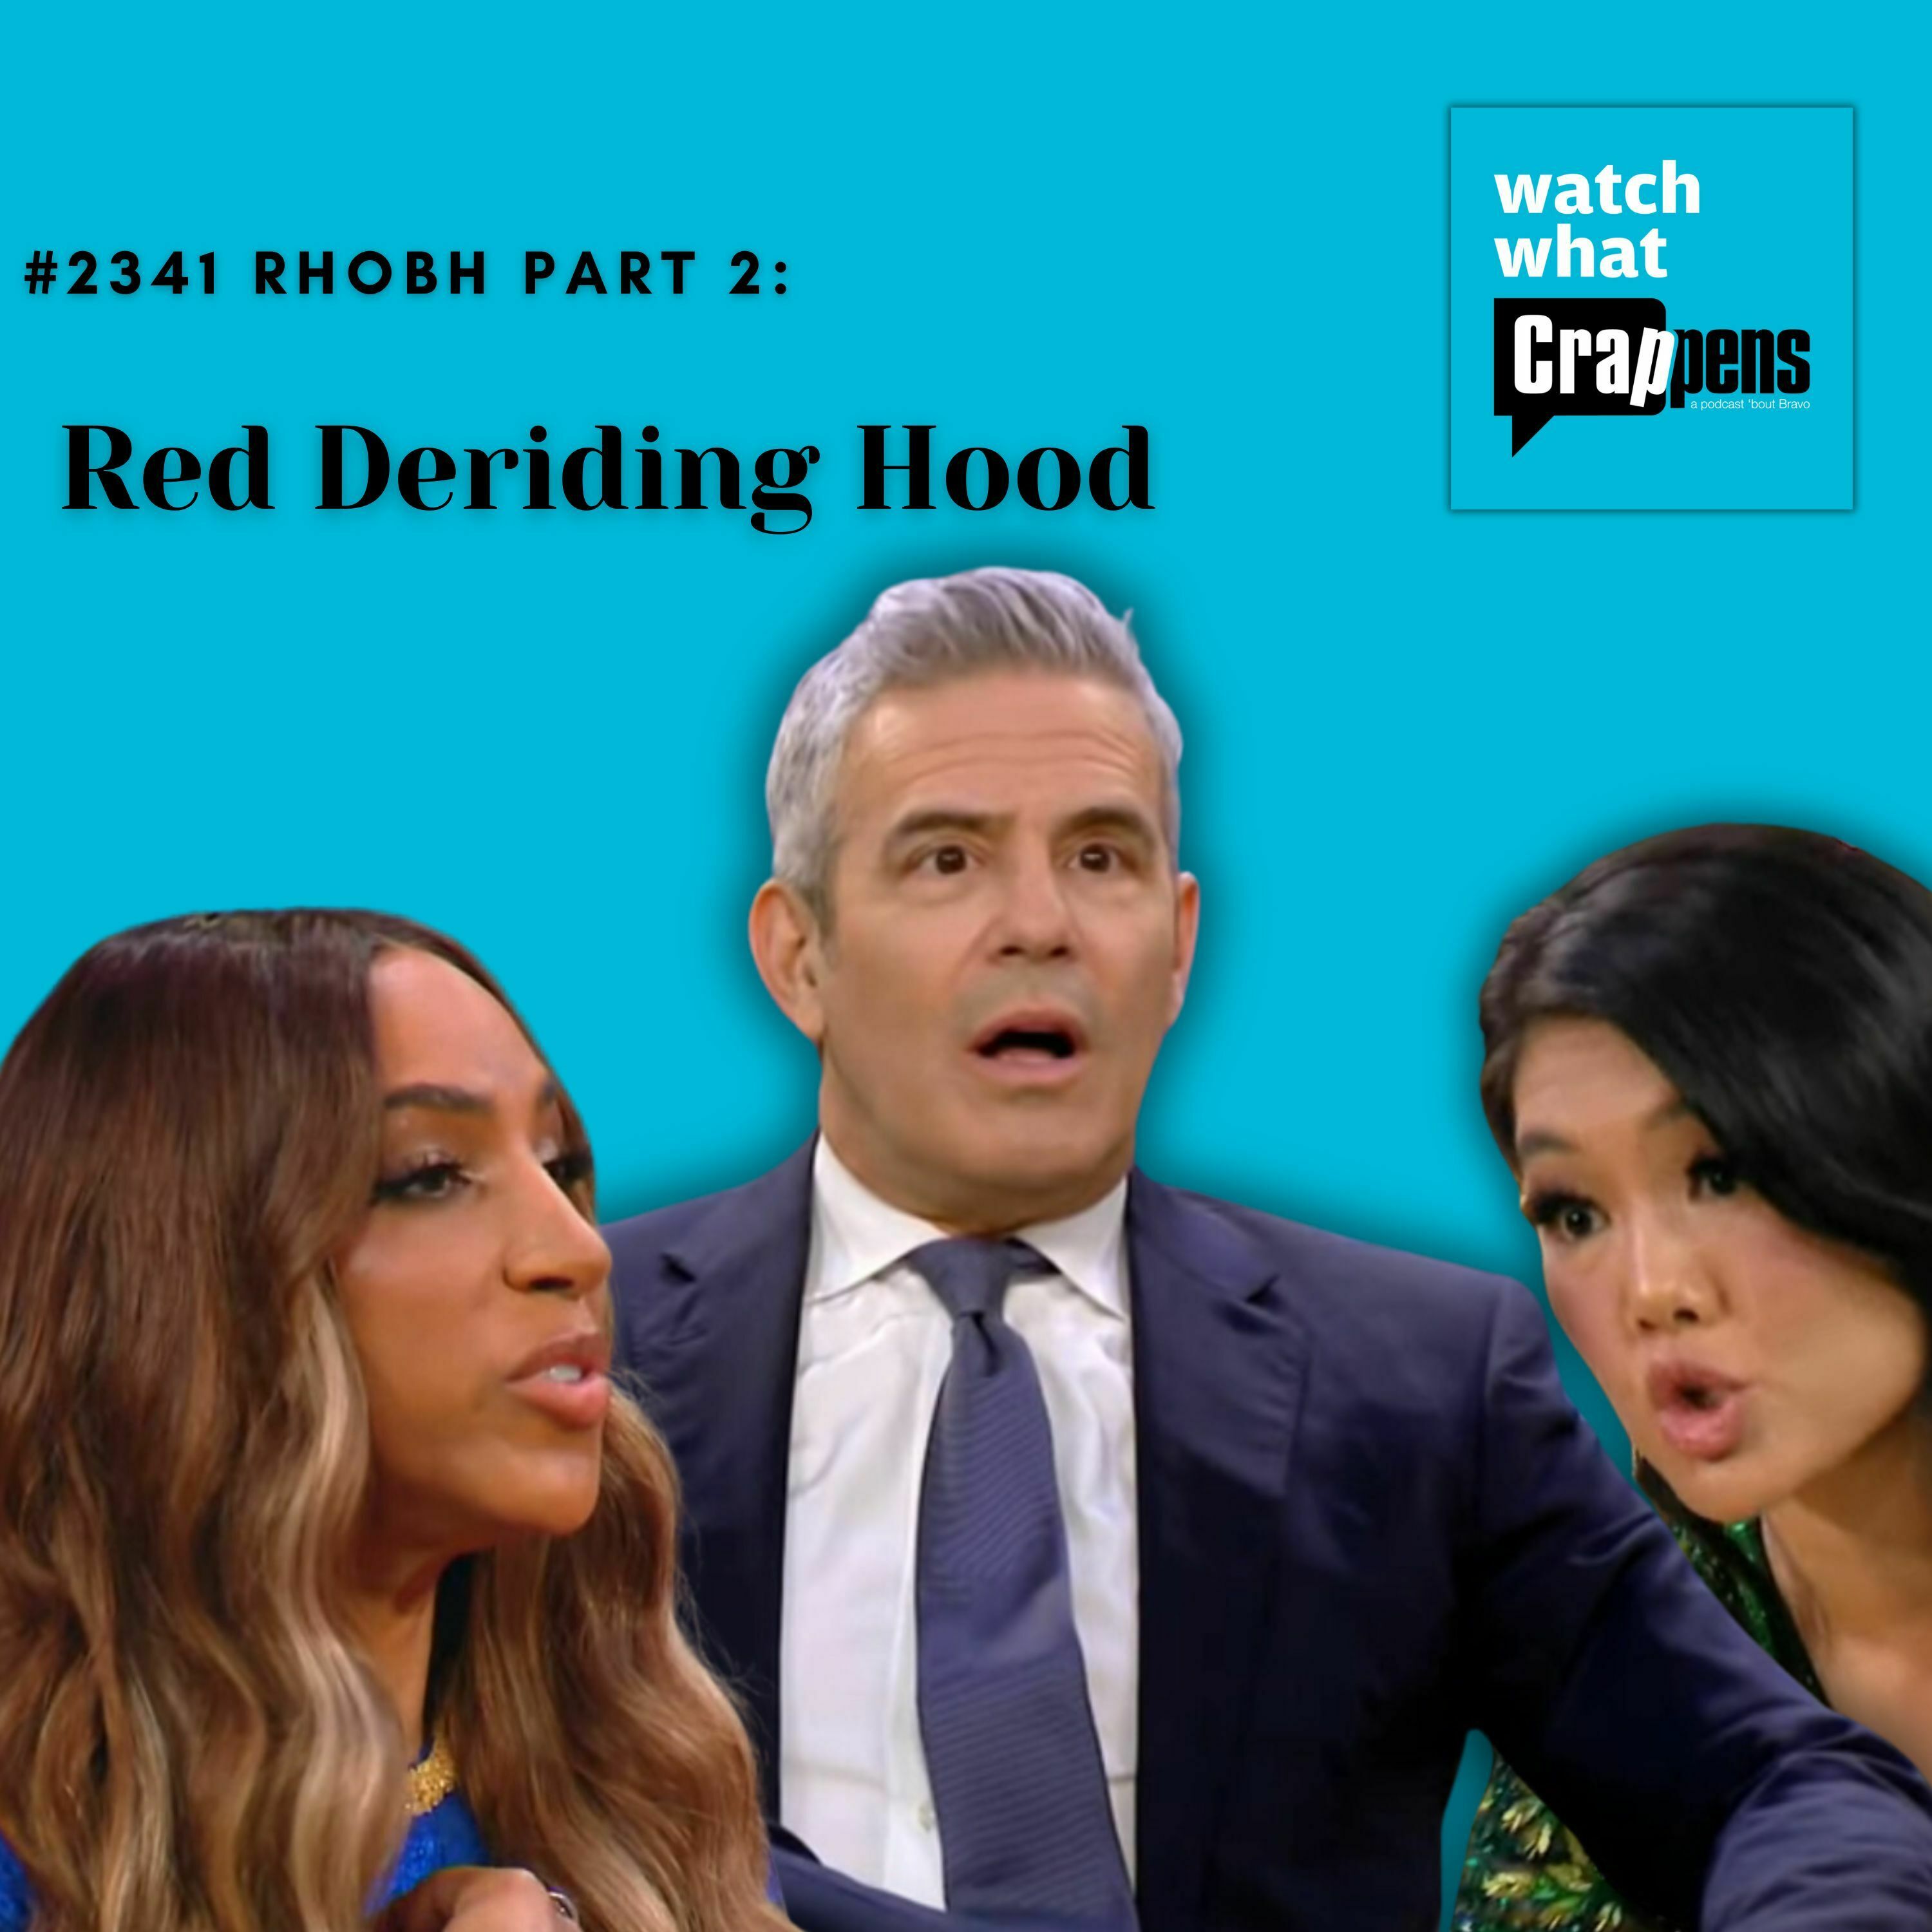 #2341 RHOBH Part 2: Red Deriding Hood